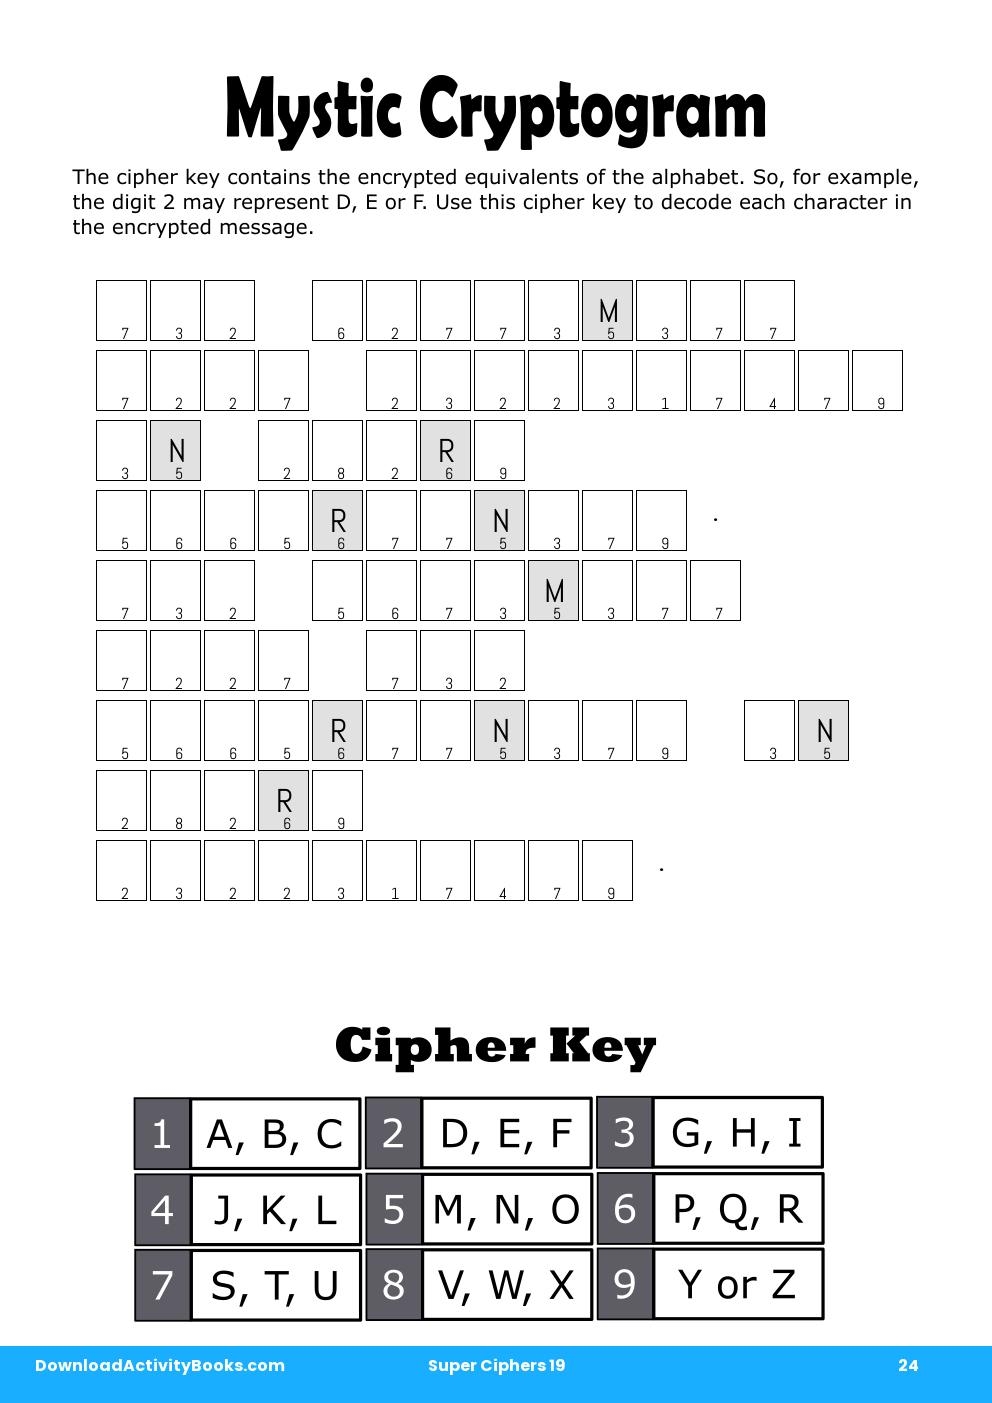 Mystic Cryptogram in Super Ciphers 19